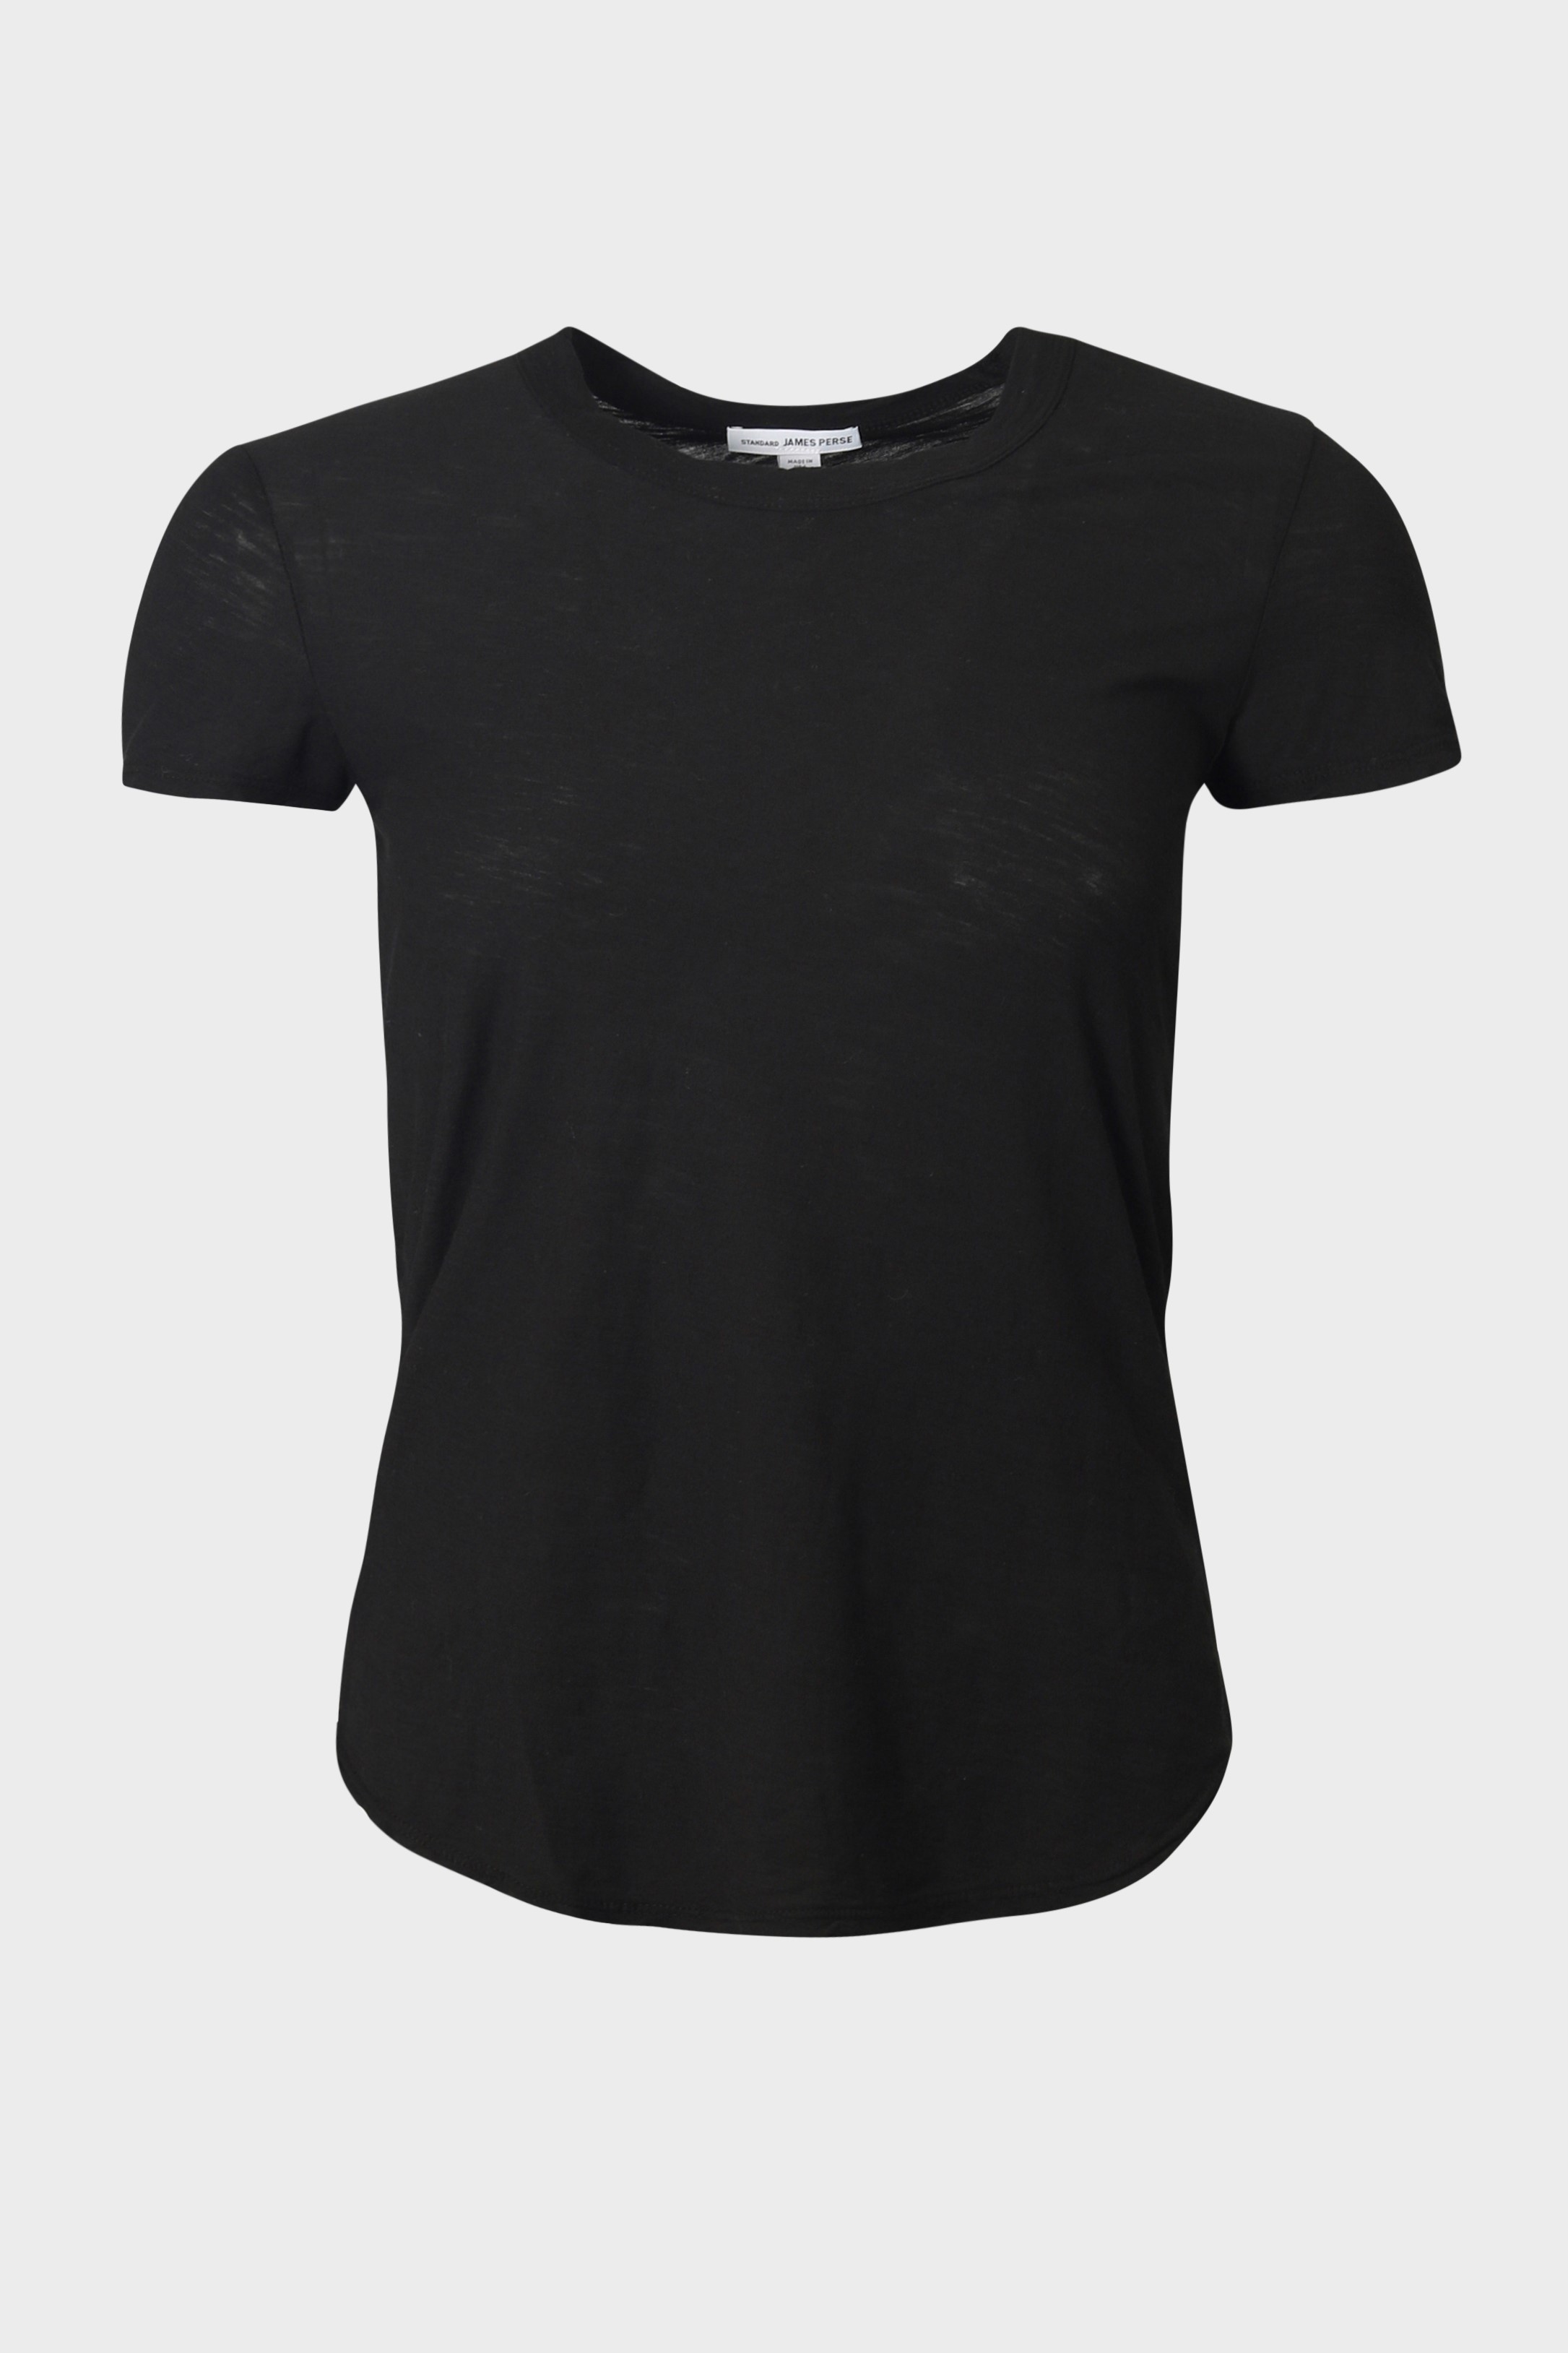 JAMES PERSE Sheer Slub Crew Neck T-Shirt in Black 3/L